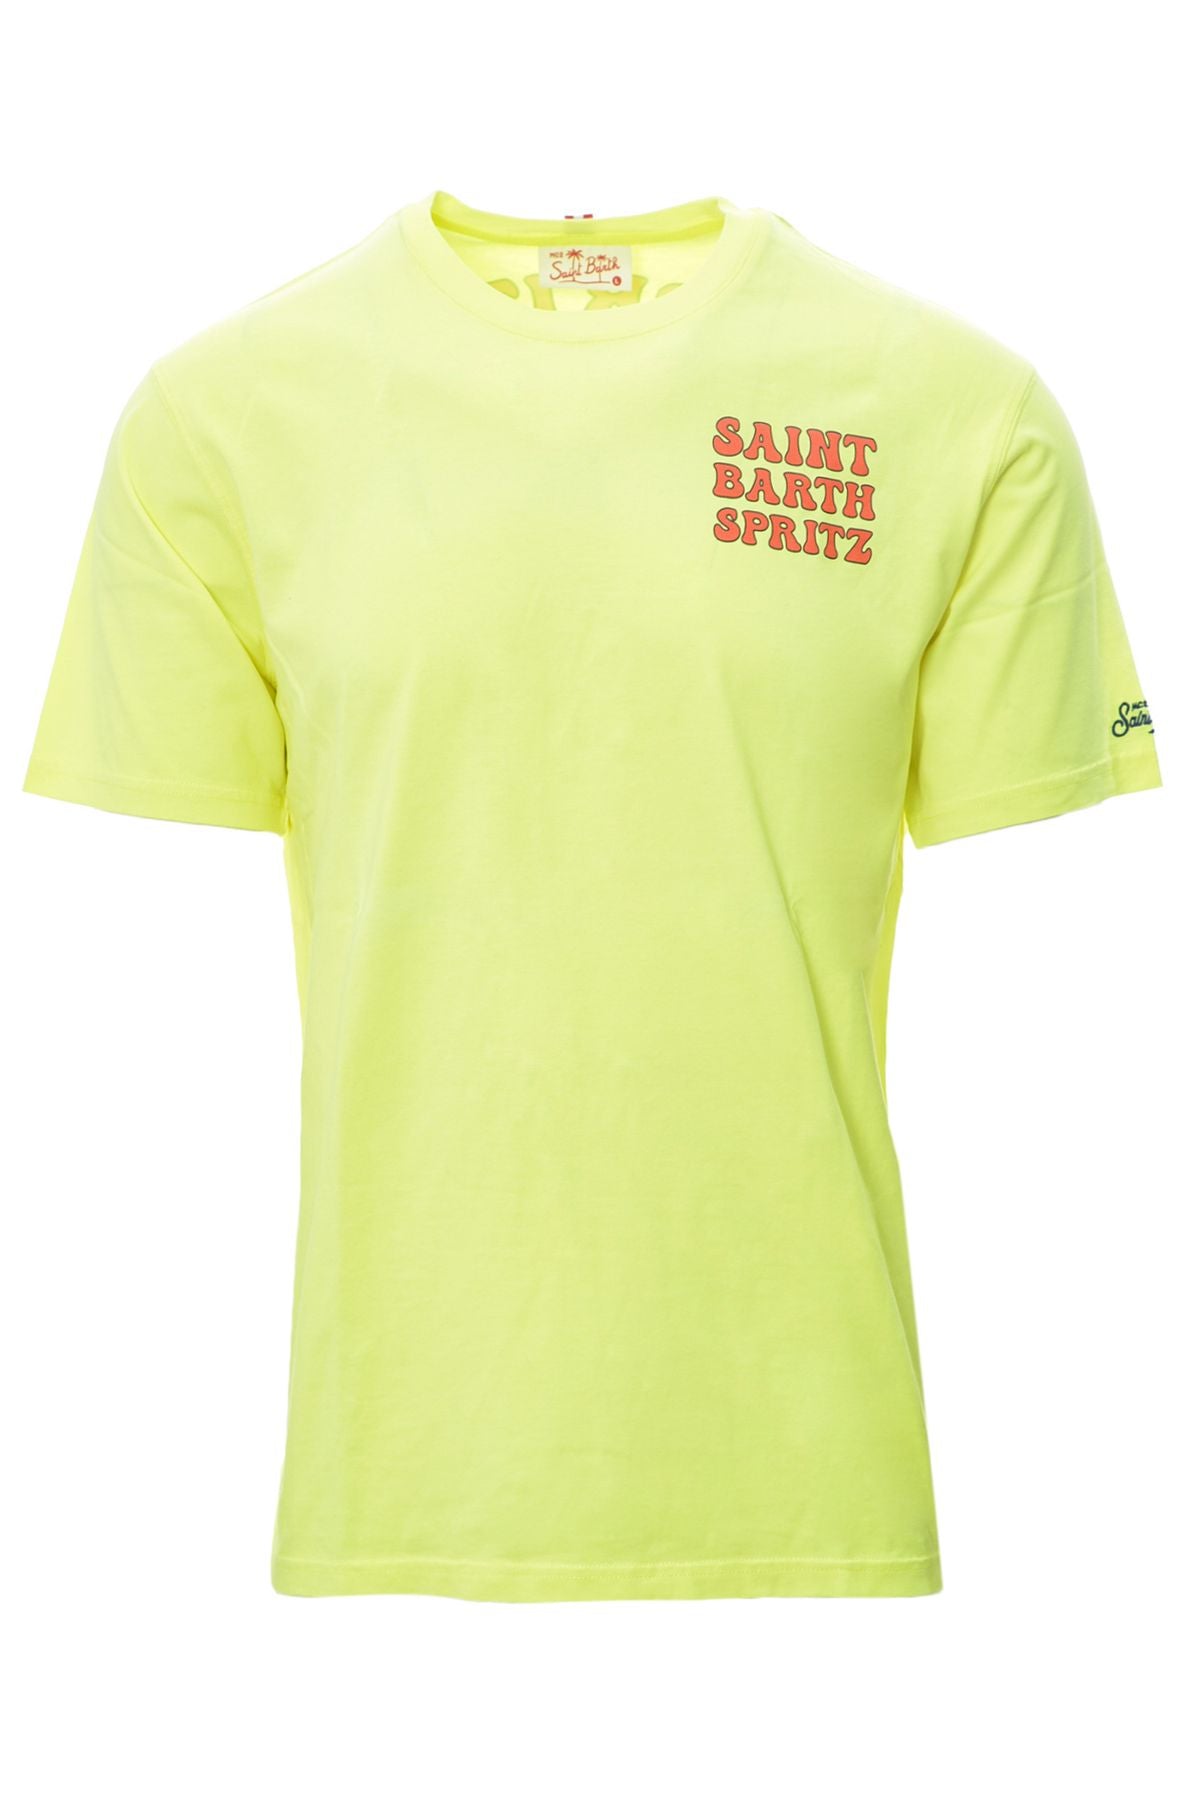 SAINT BART Camiseta Algodón Primavera/Verano